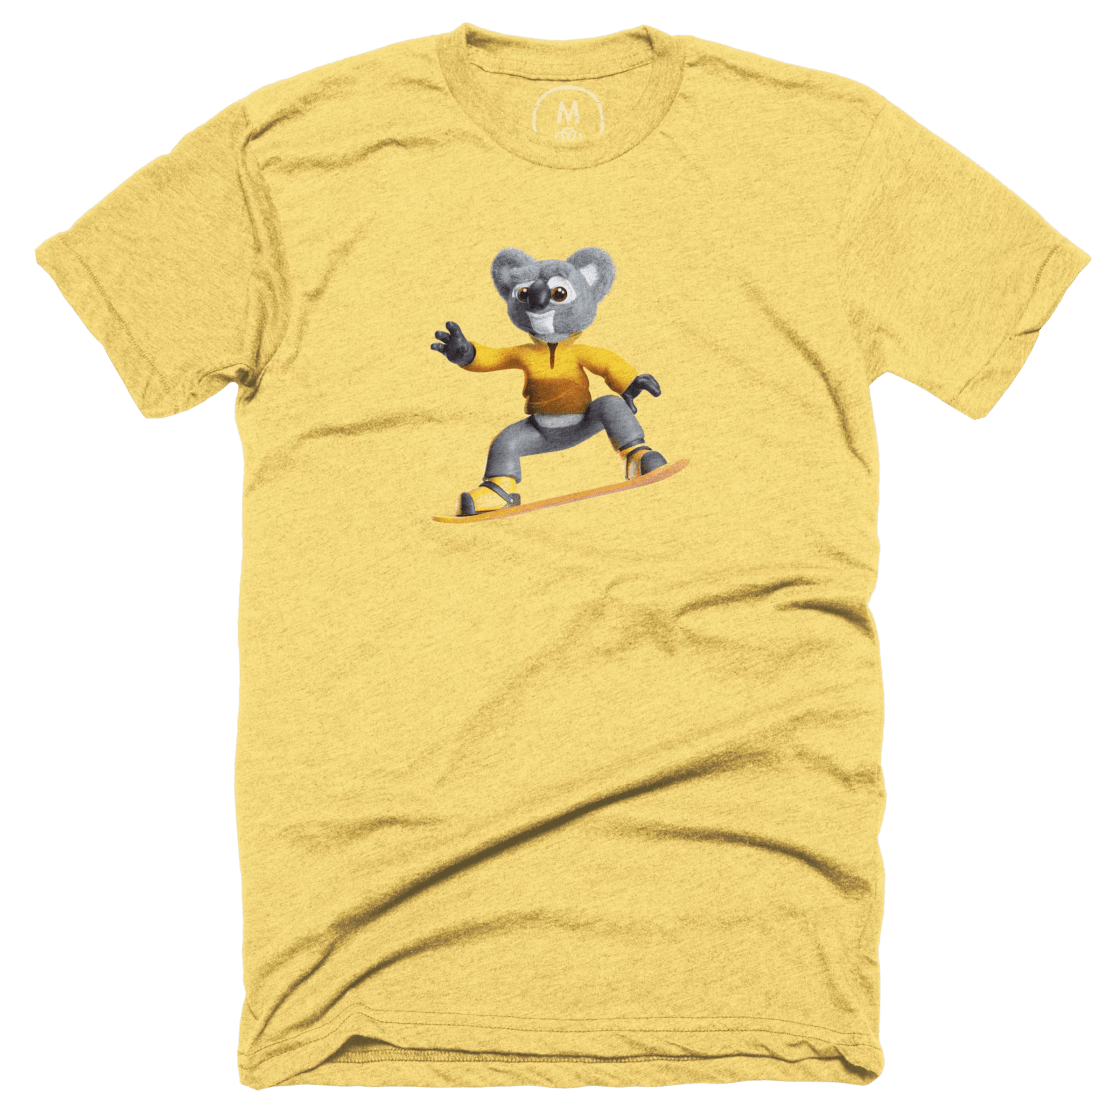 Yellow T-Shirt with a Koala